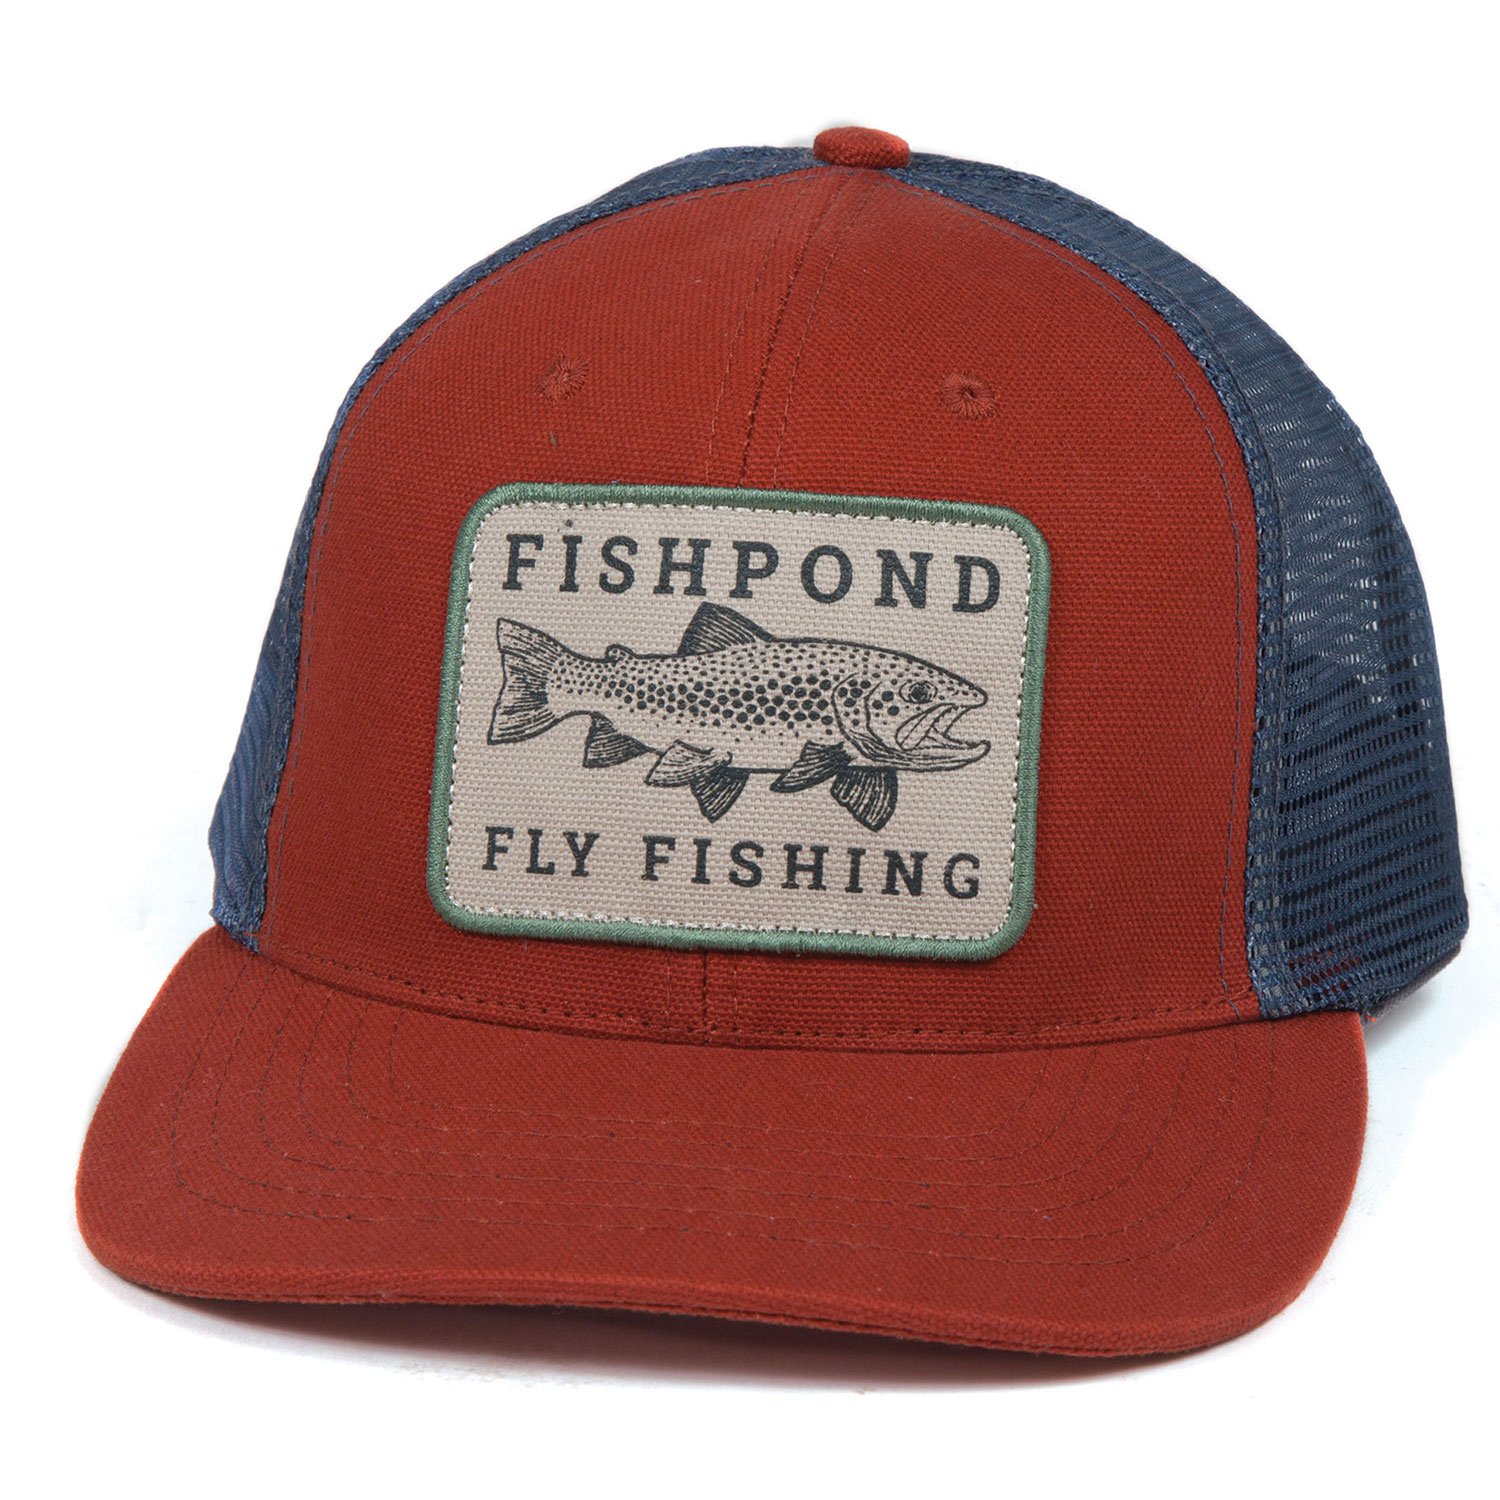 Fishpond Las Pampas Hat - Redrock/Slate